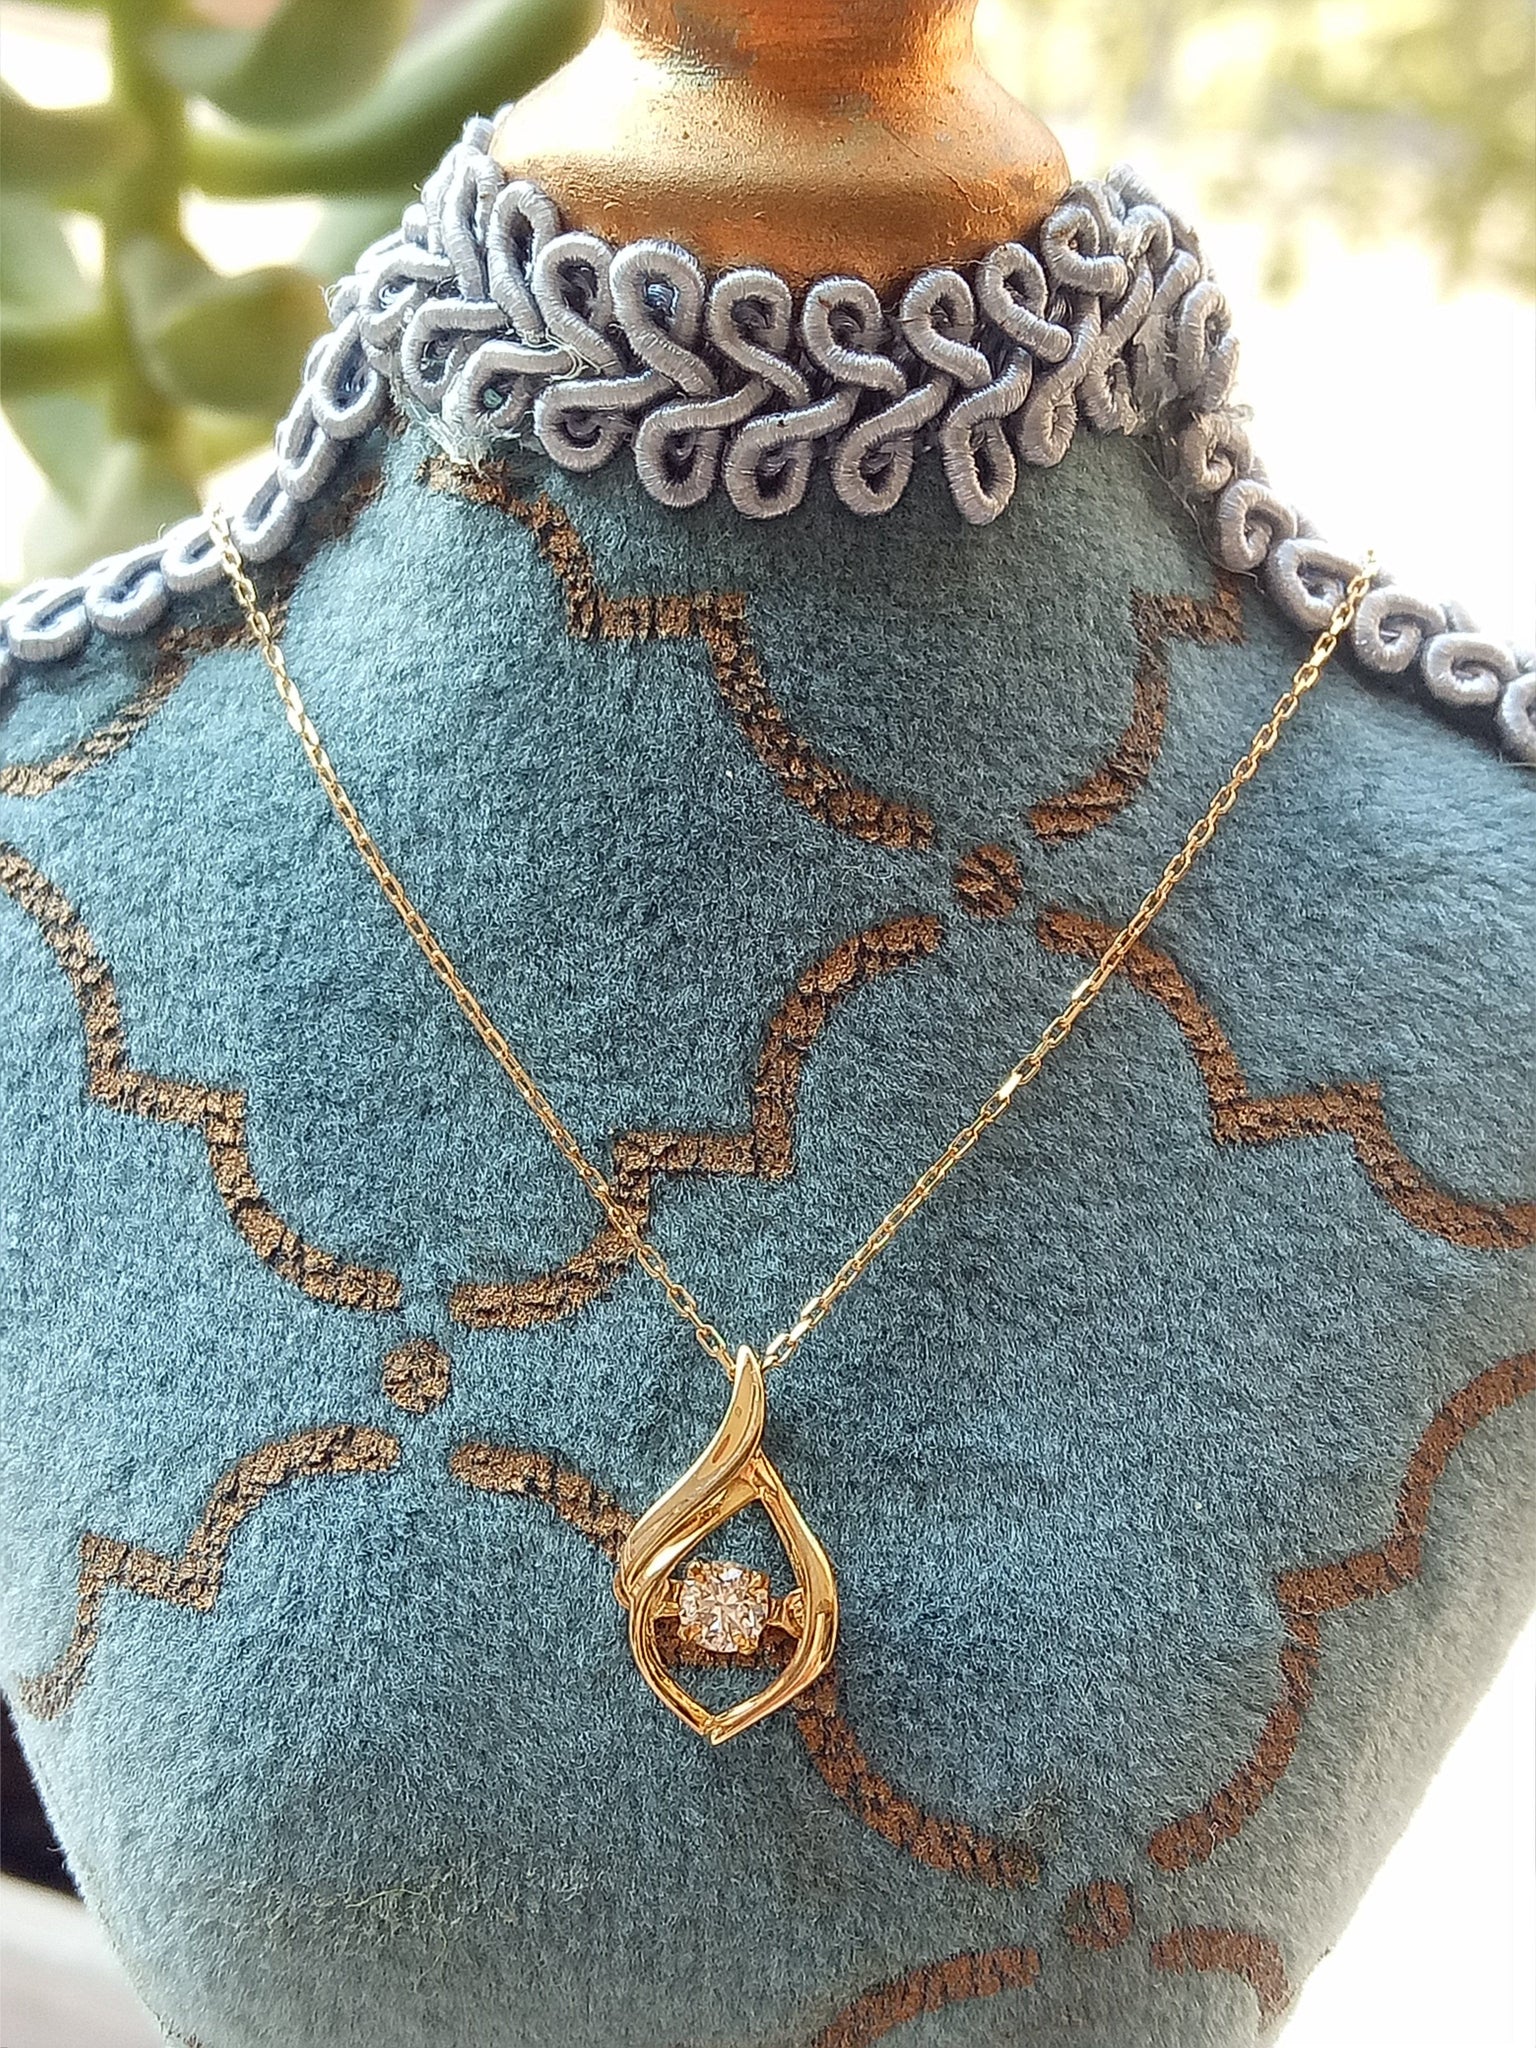 doveggs diamond pendant necklace 18k yellow gold center 0.08 carat diamond pendant necklace for women - DovEggs-Seattle